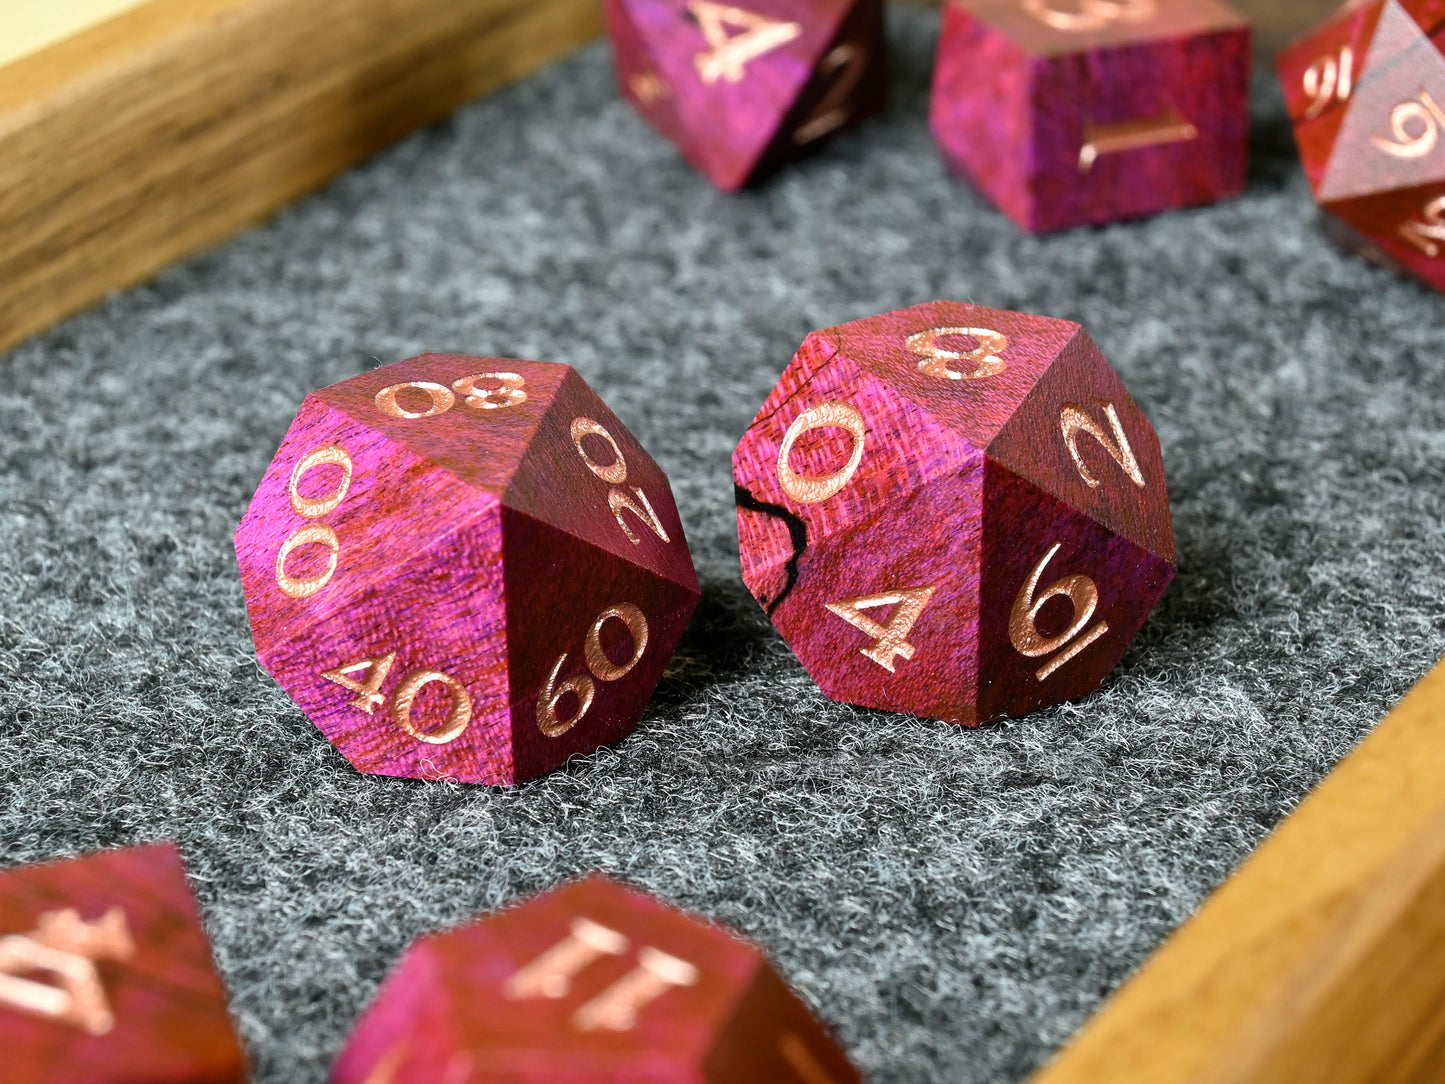 Pink Spalted Maple wood dice set for dnd tttrpg